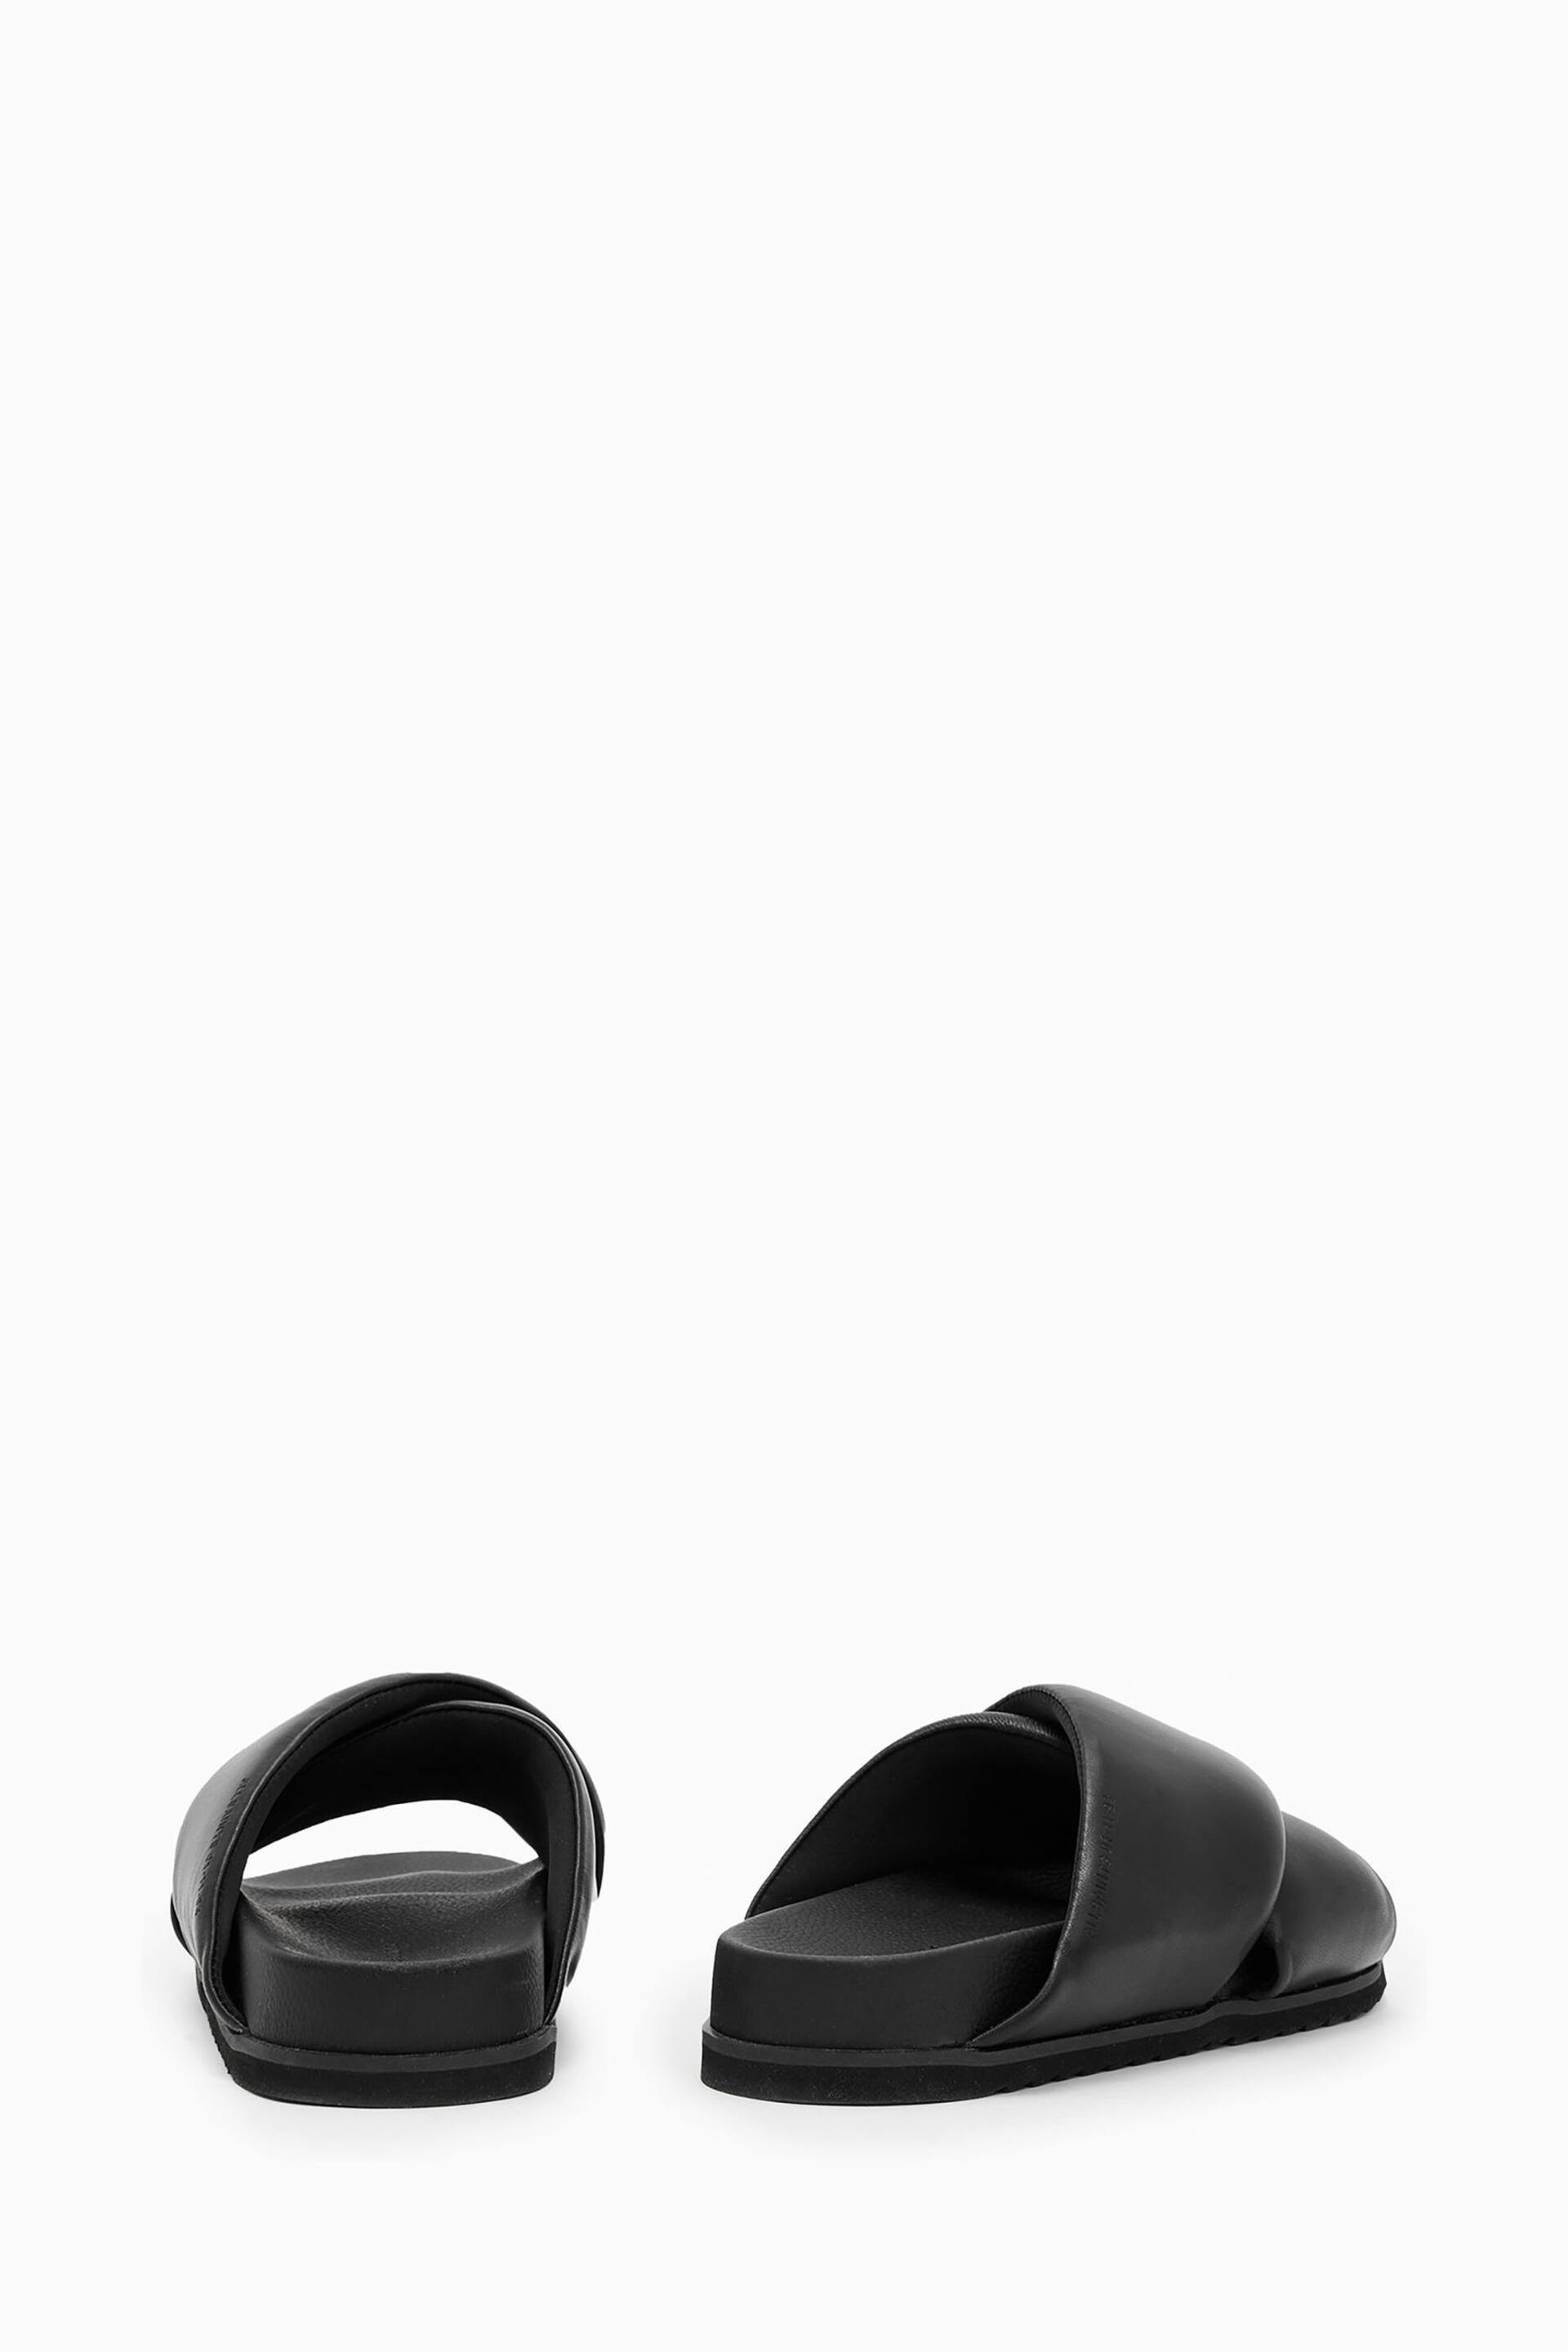 AllSaints Black Saki Sandals - Image 4 of 6